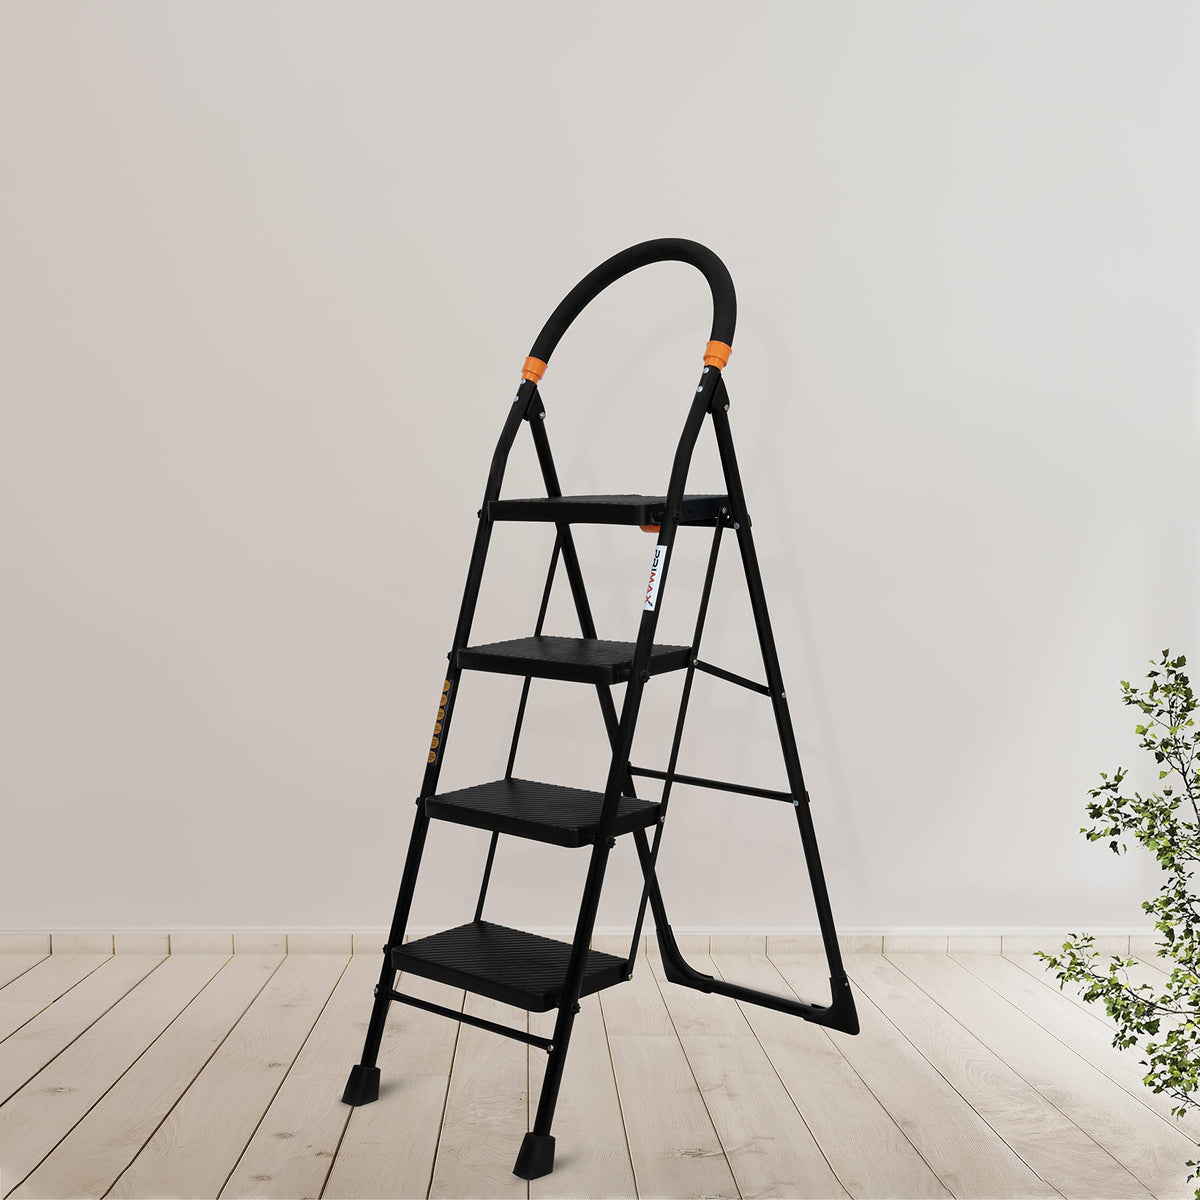 Primax 4-Step Foldable Ladder with Safety-Clutch Lock and Ribbed Steps/Step Ladder/GI Steel Ladder for Home(Primo-Black&Orange)